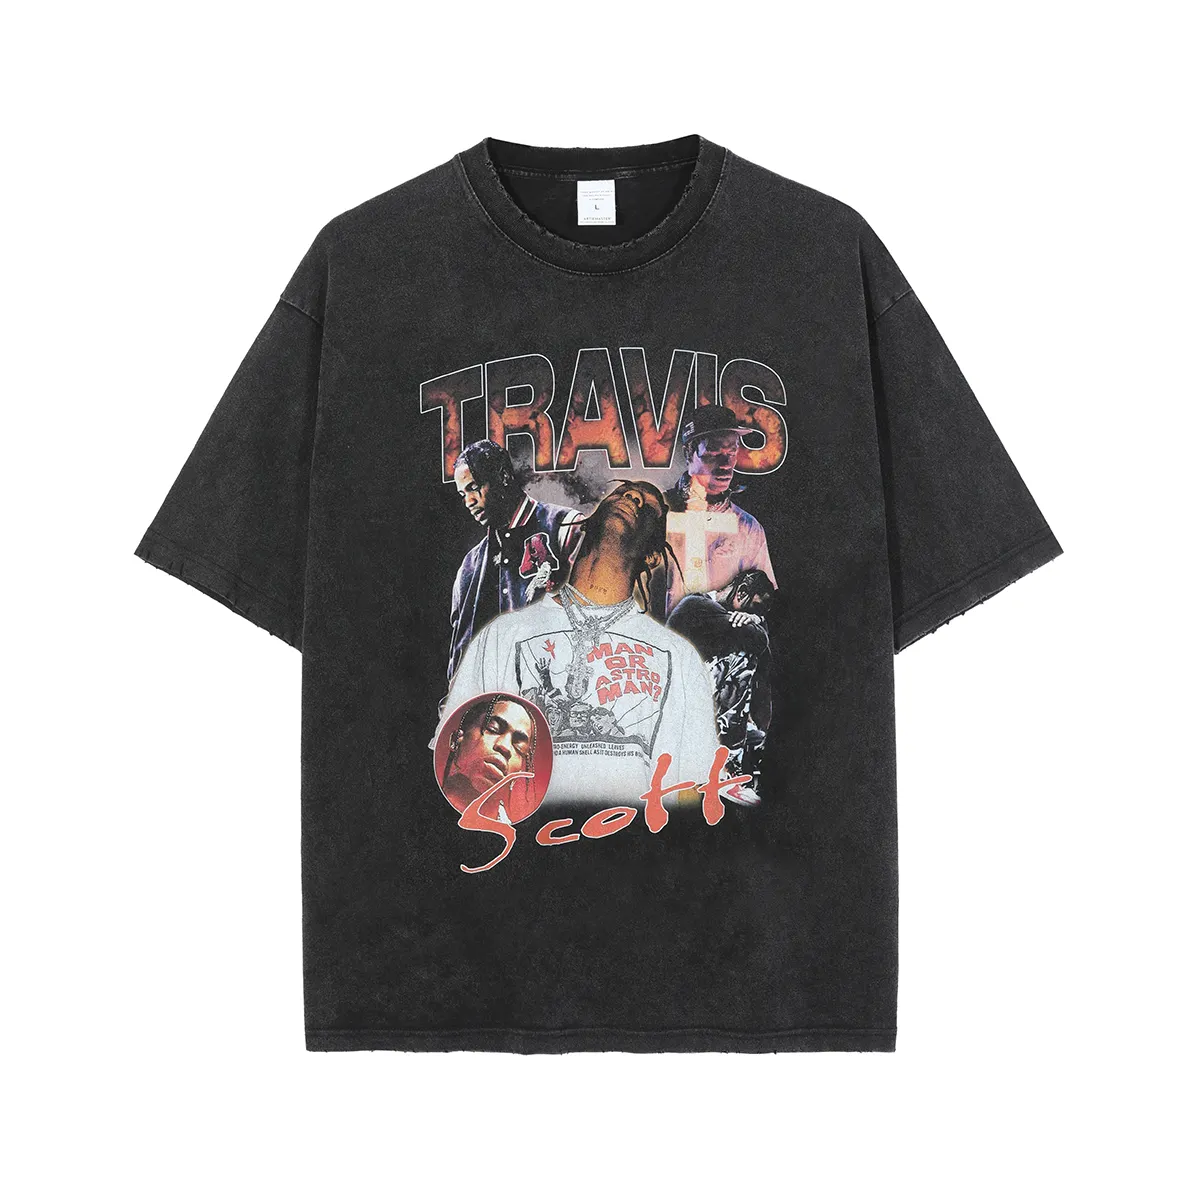 Wholesale custom graphic tees black t shirts men's pop star rock band printed streetwear tshirts